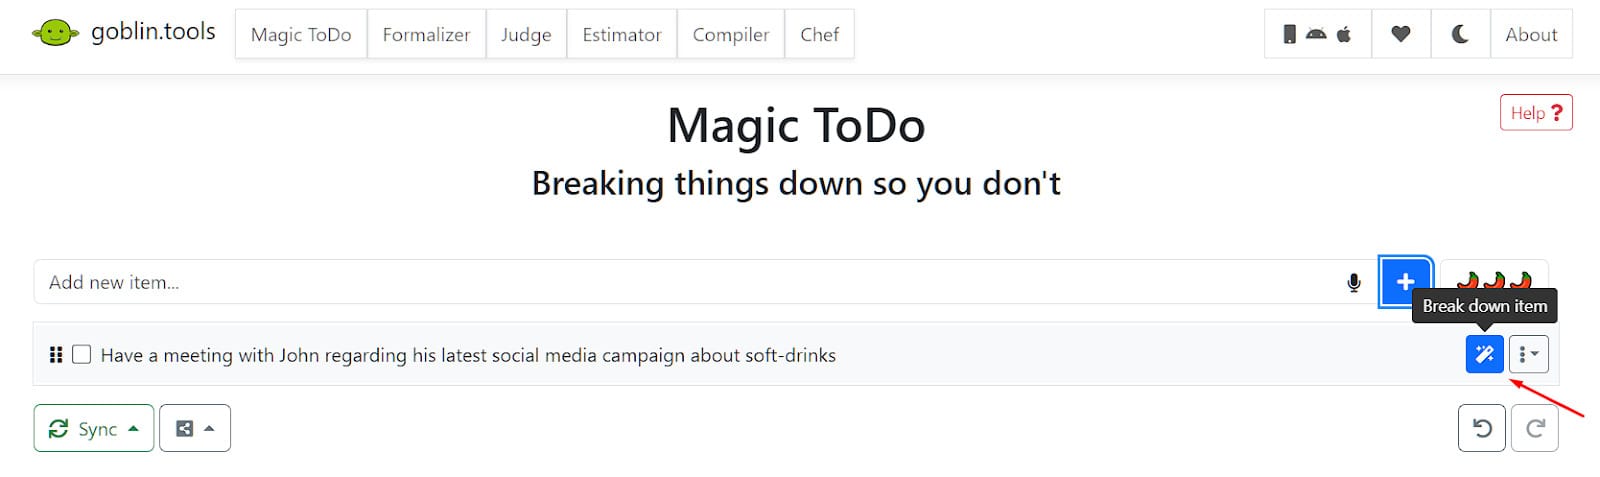 breaking down tasks into smaller chunks using magic todo